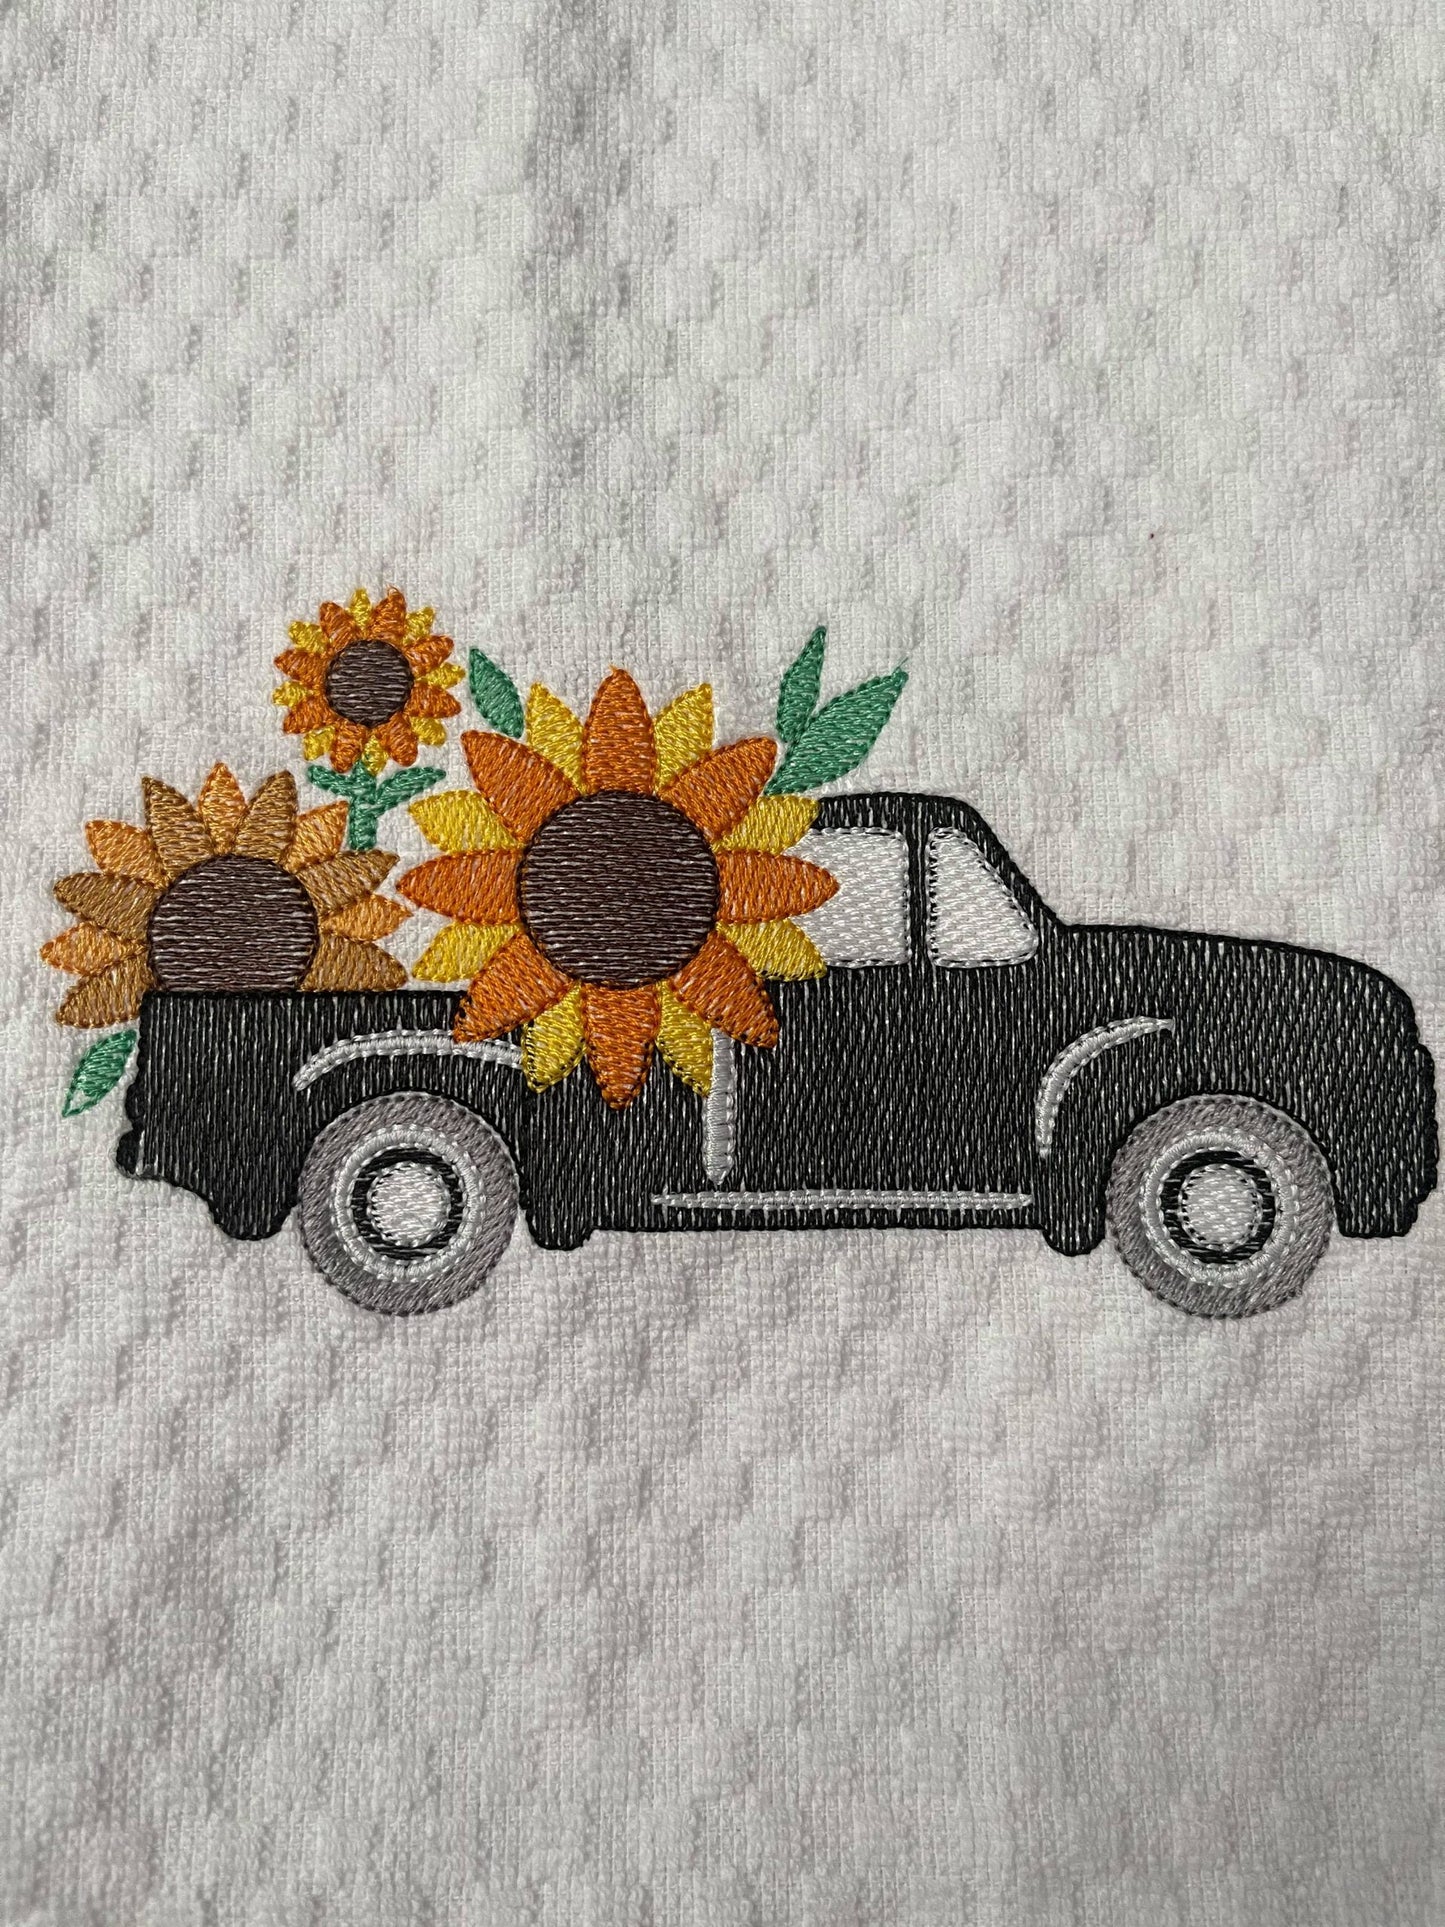 Sketch Sunflower Truck - 3 sizes- Digital Embroidery Design